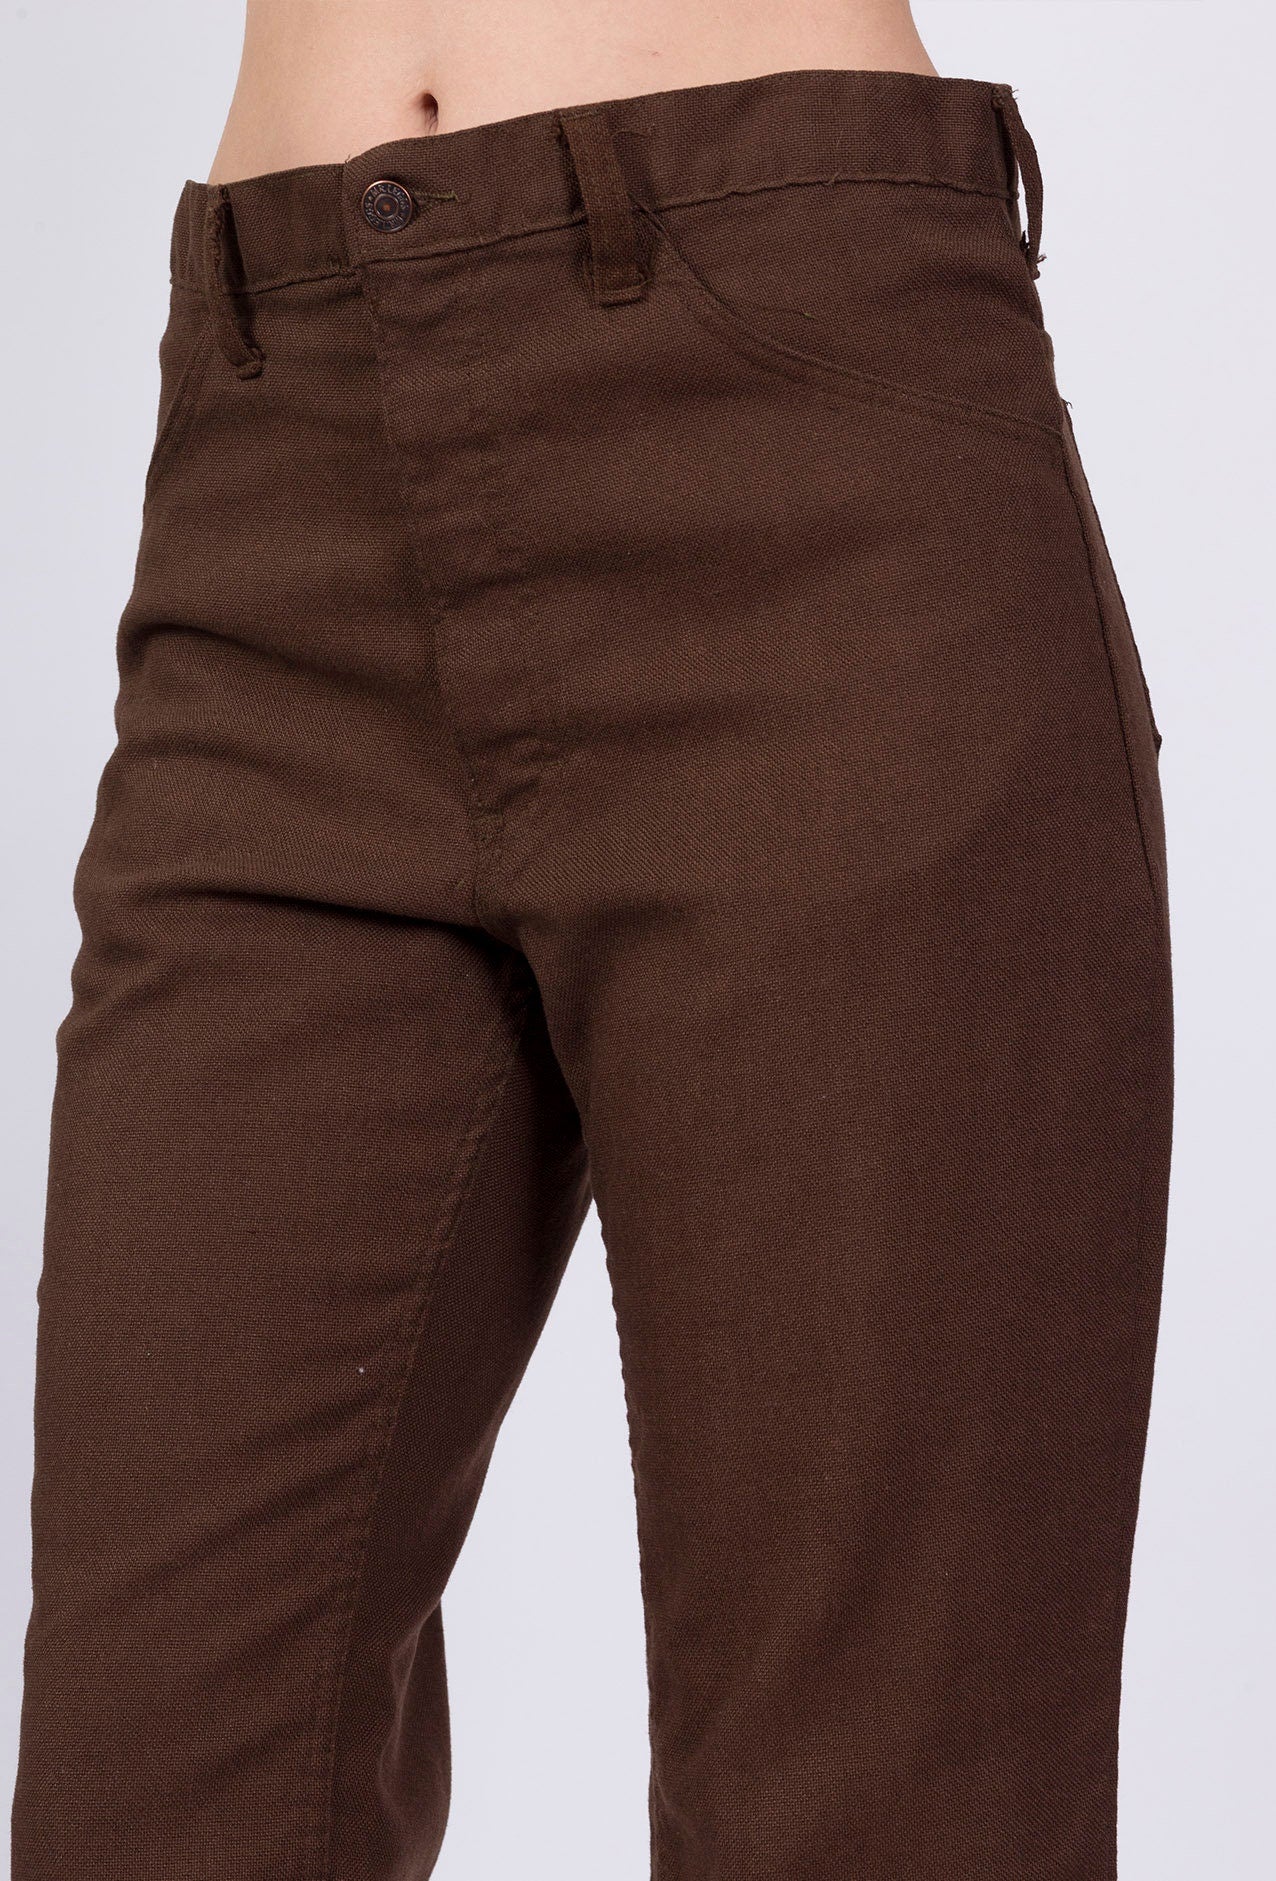 70s Mr Leggs Brown Trousers - Men's Medium, 33" 